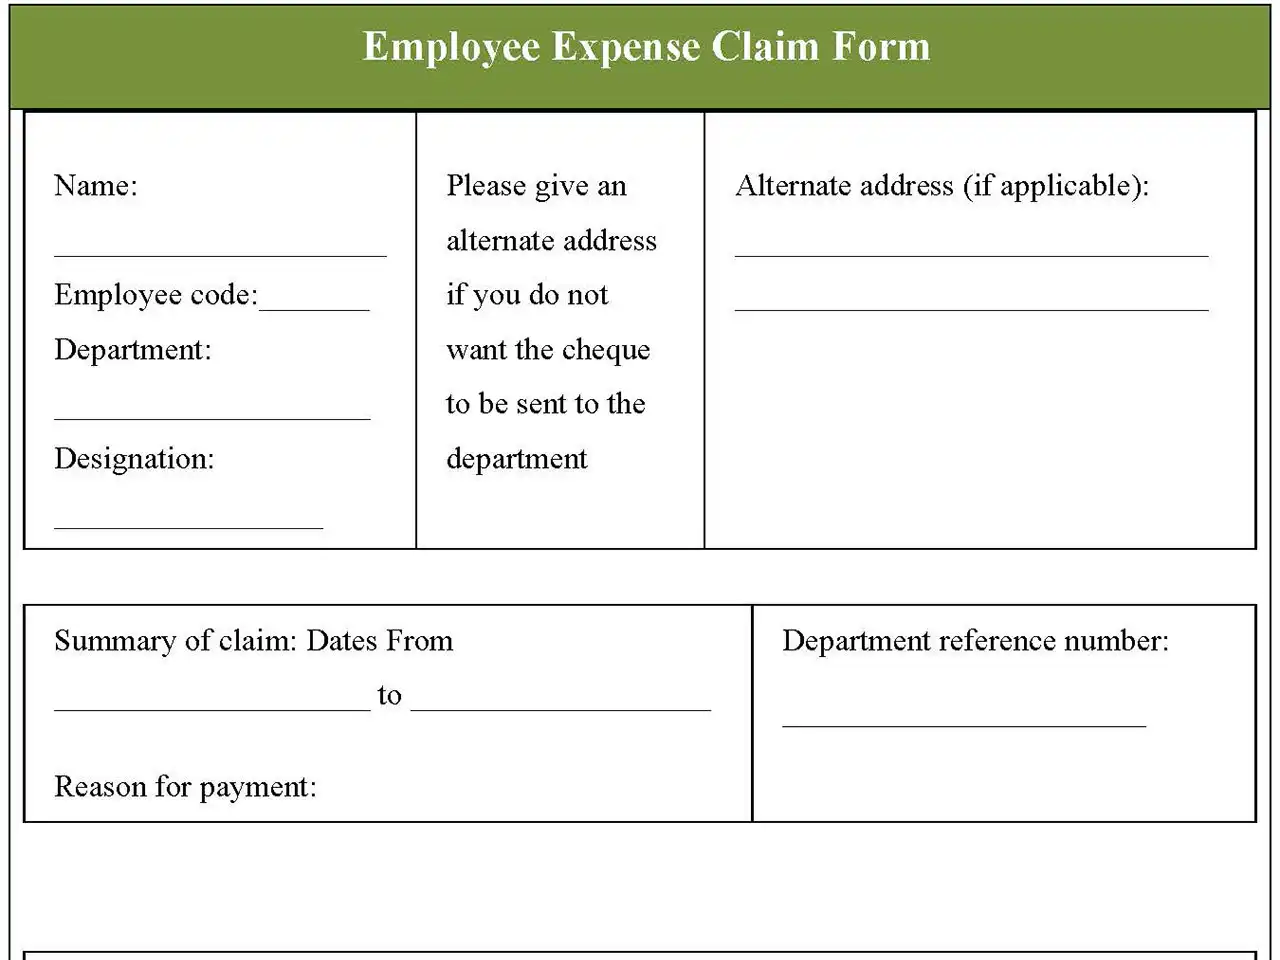 Employee Expense Claim Form